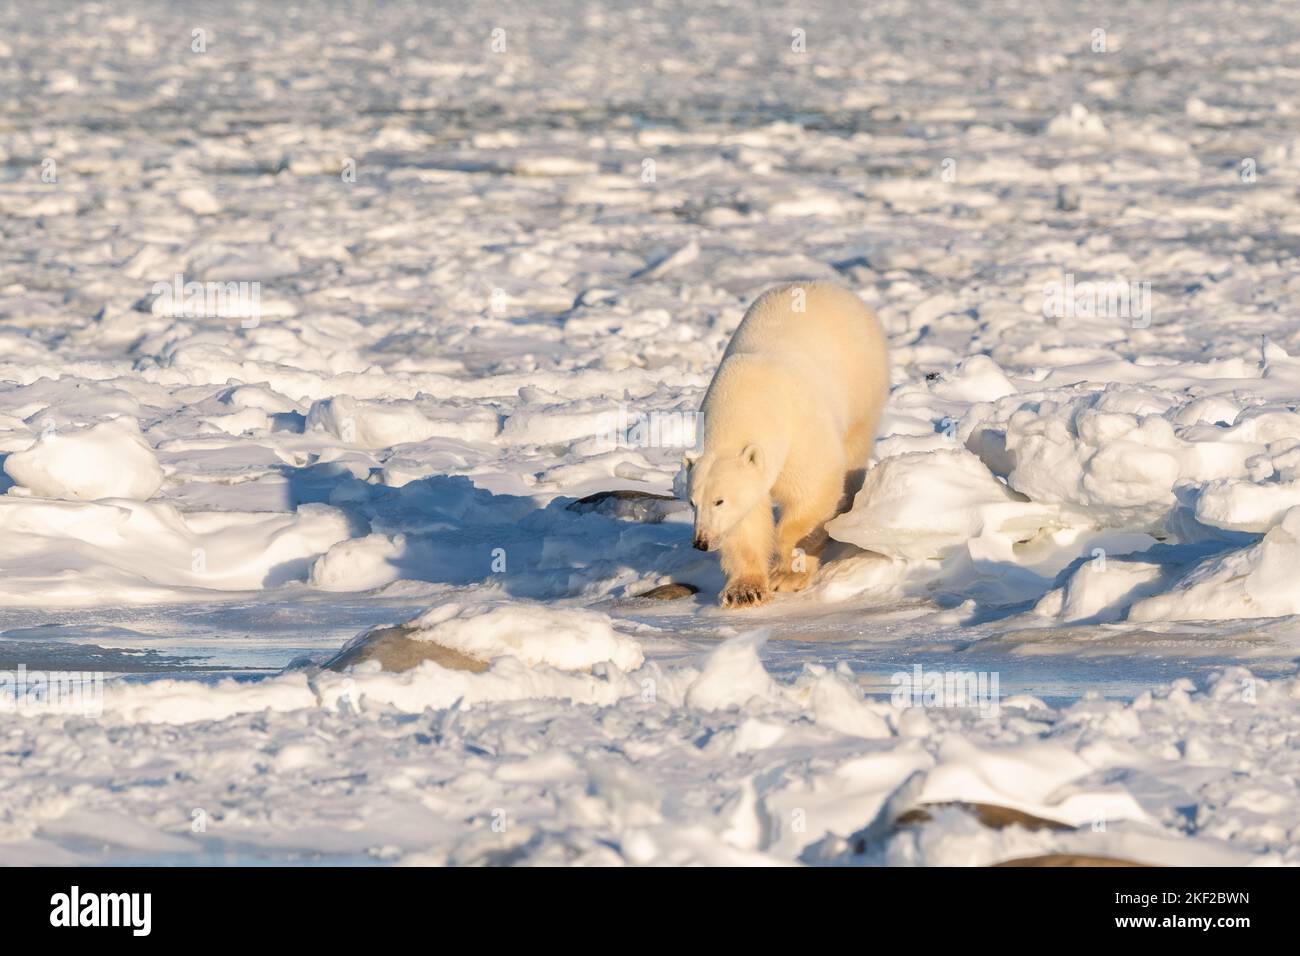 Polar bear on ice, Hudson Bay Stock Photo